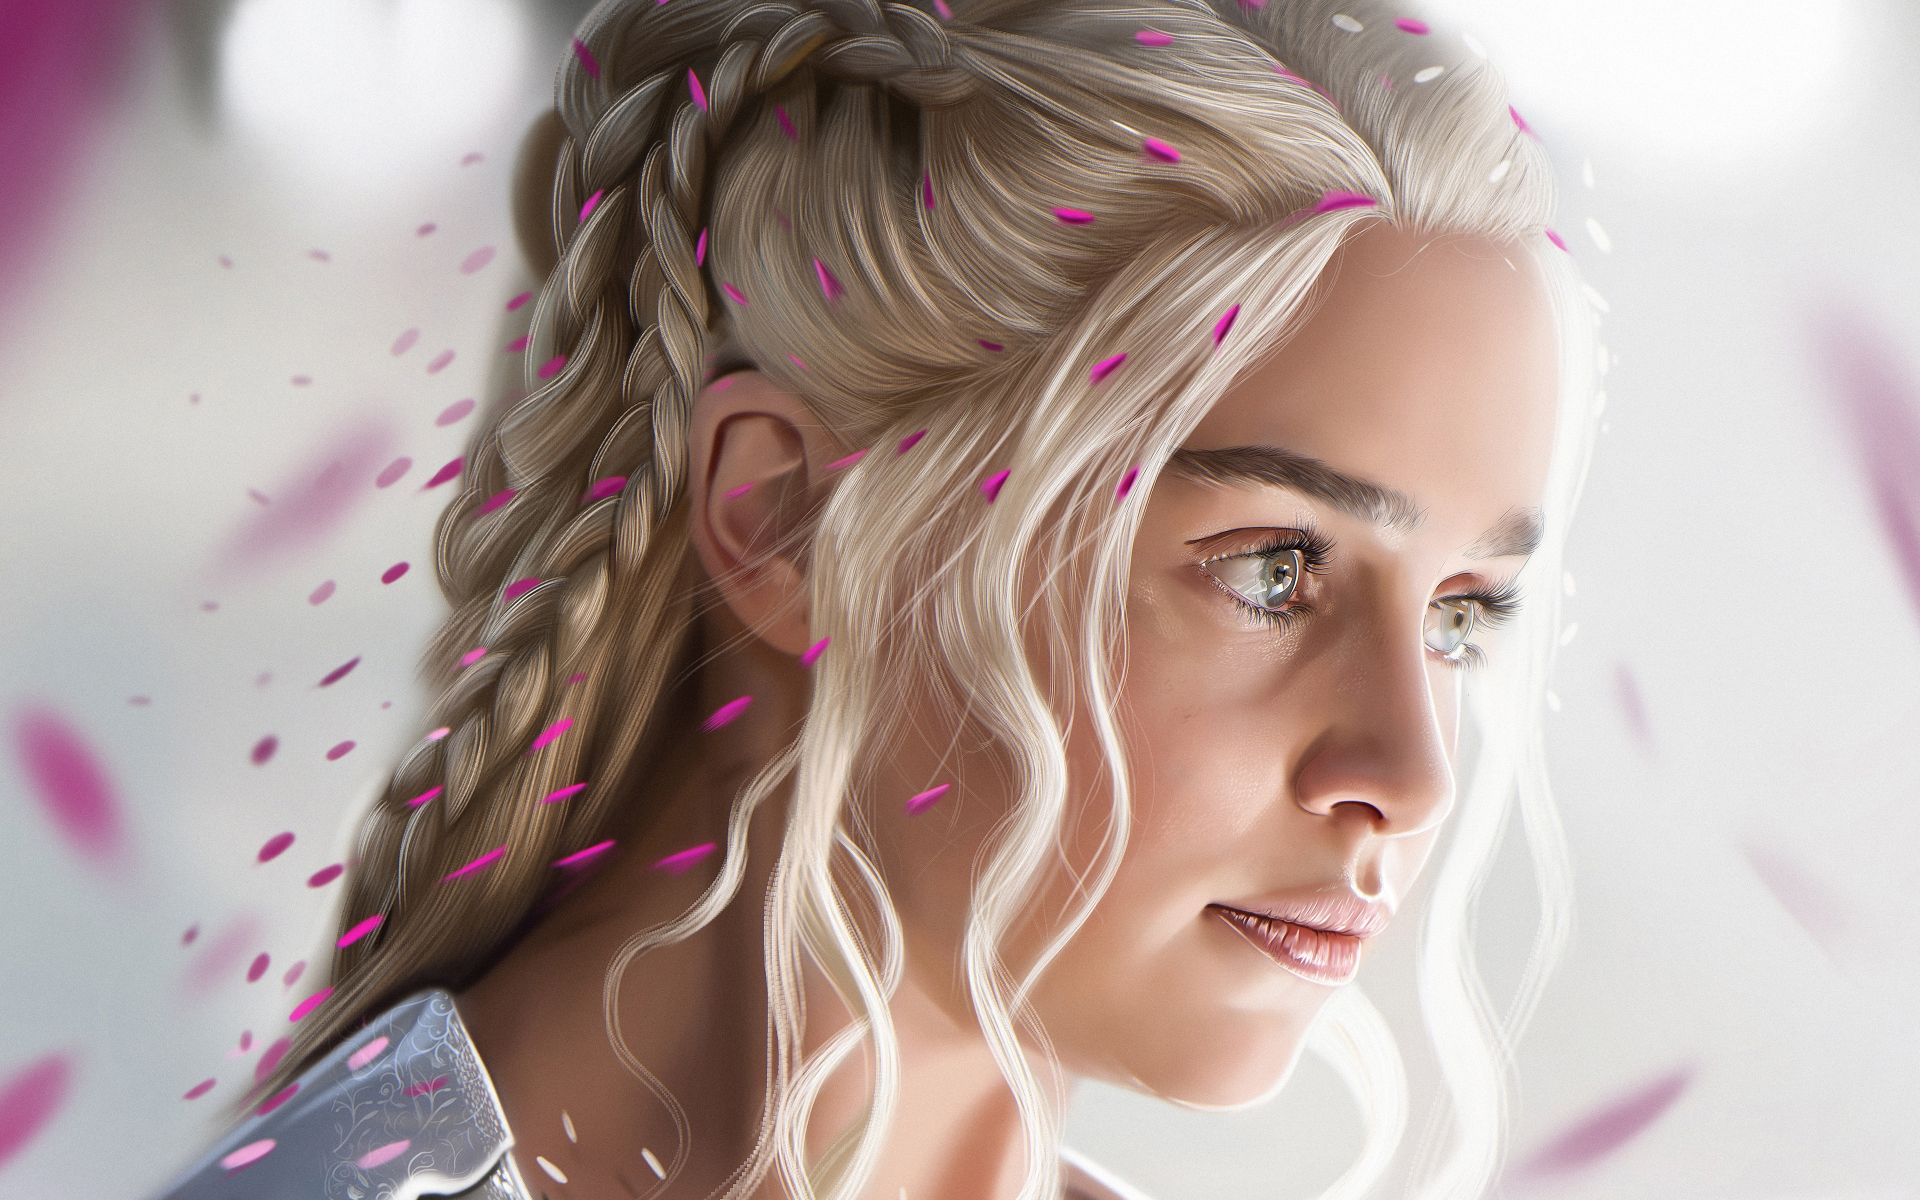 Game of Thrones Daenerys Targaryen face art